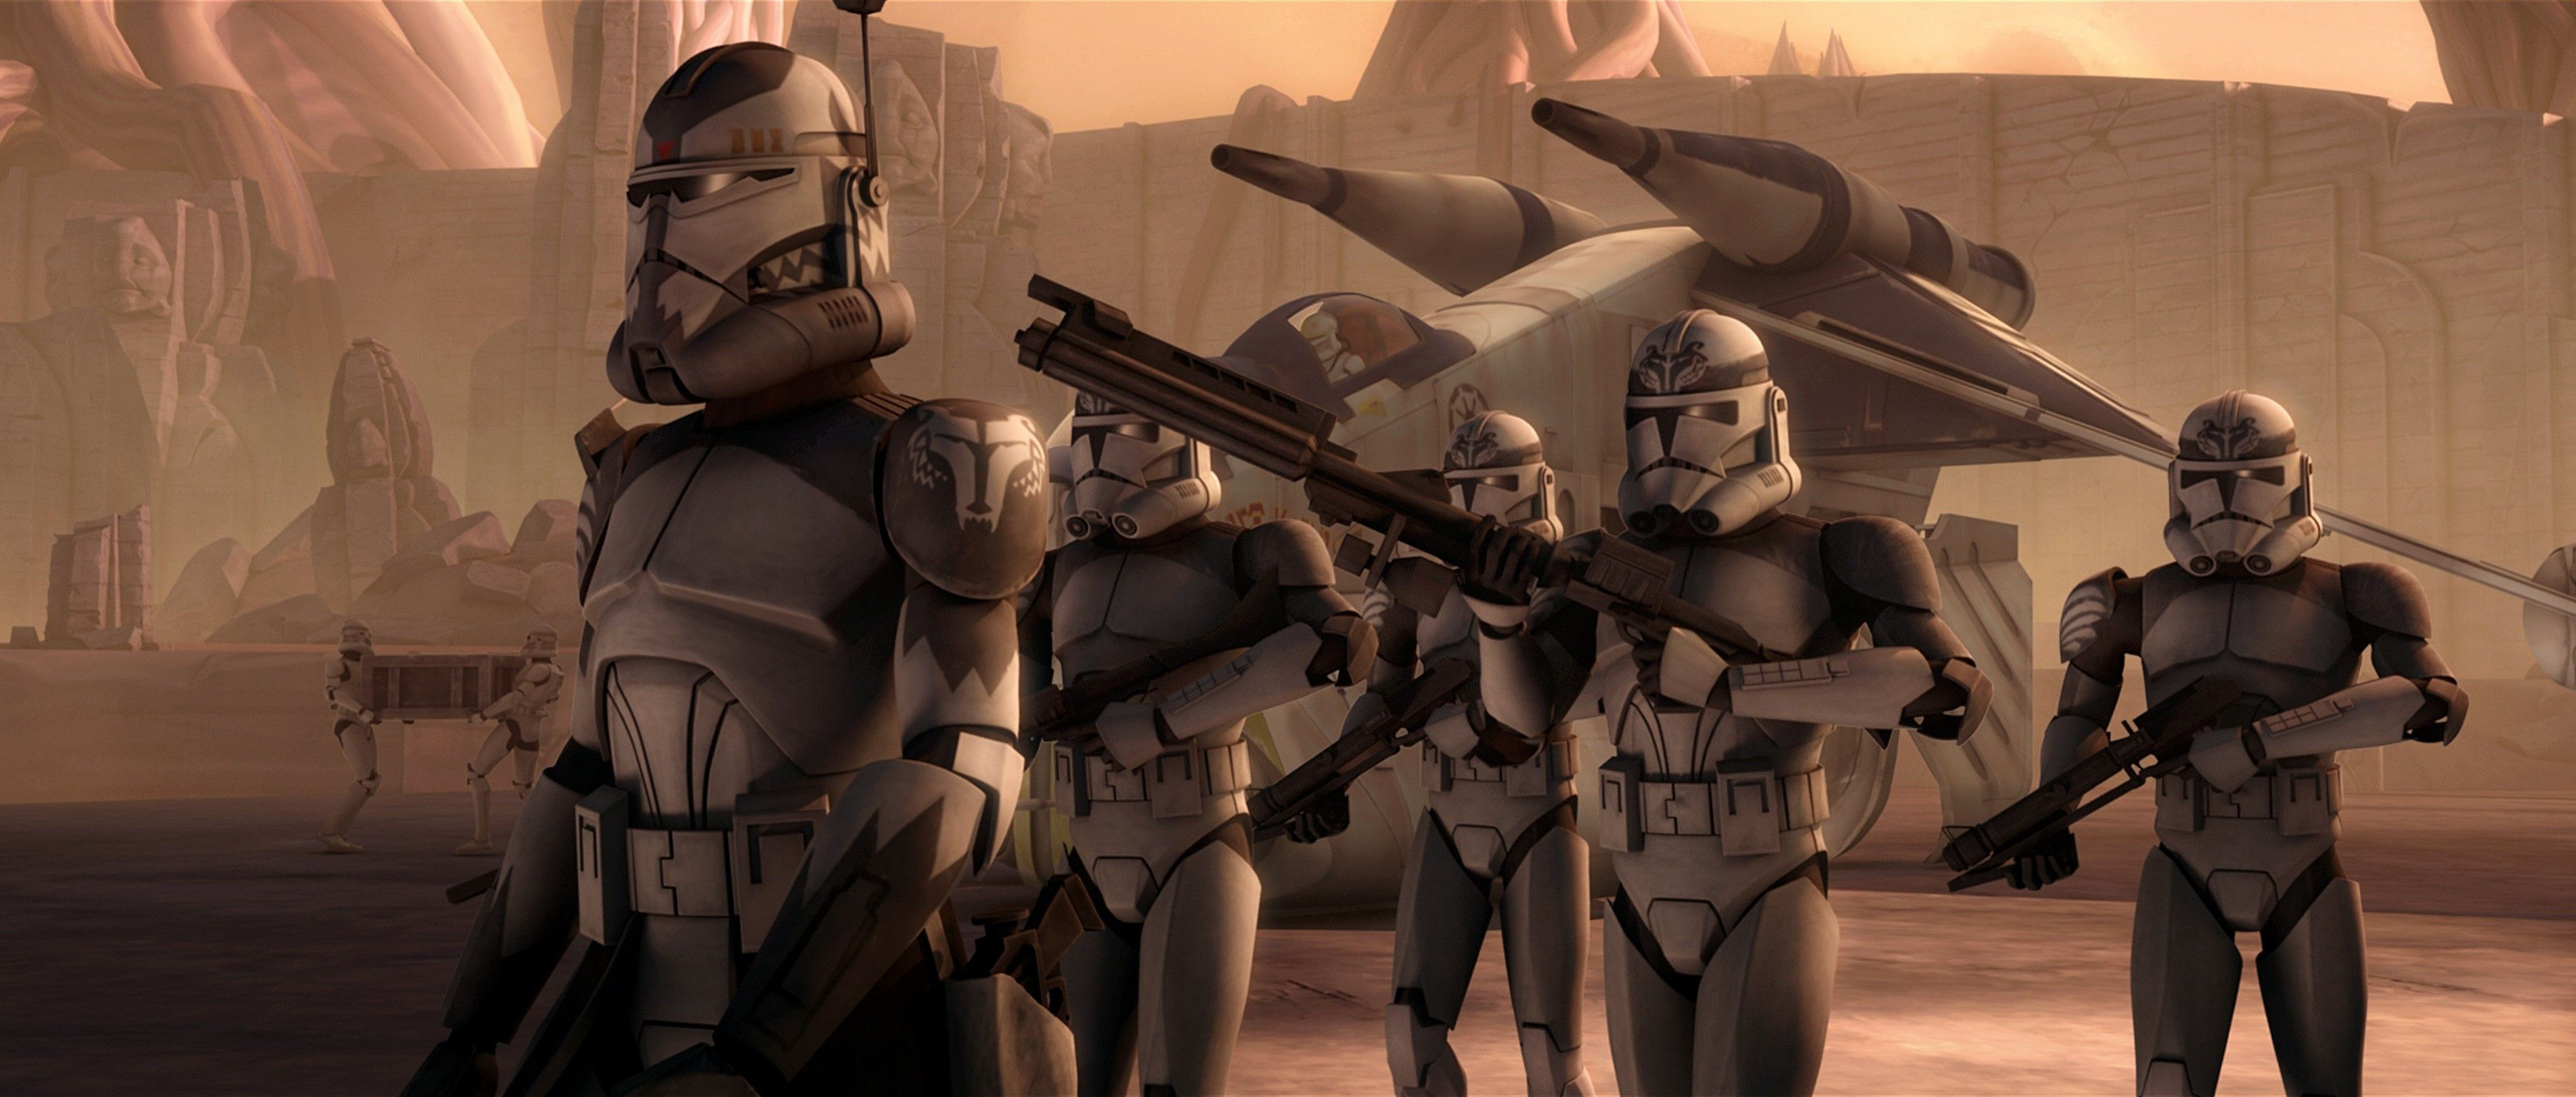 3600x1533 Epic Star Wars Trooper Wallpapers